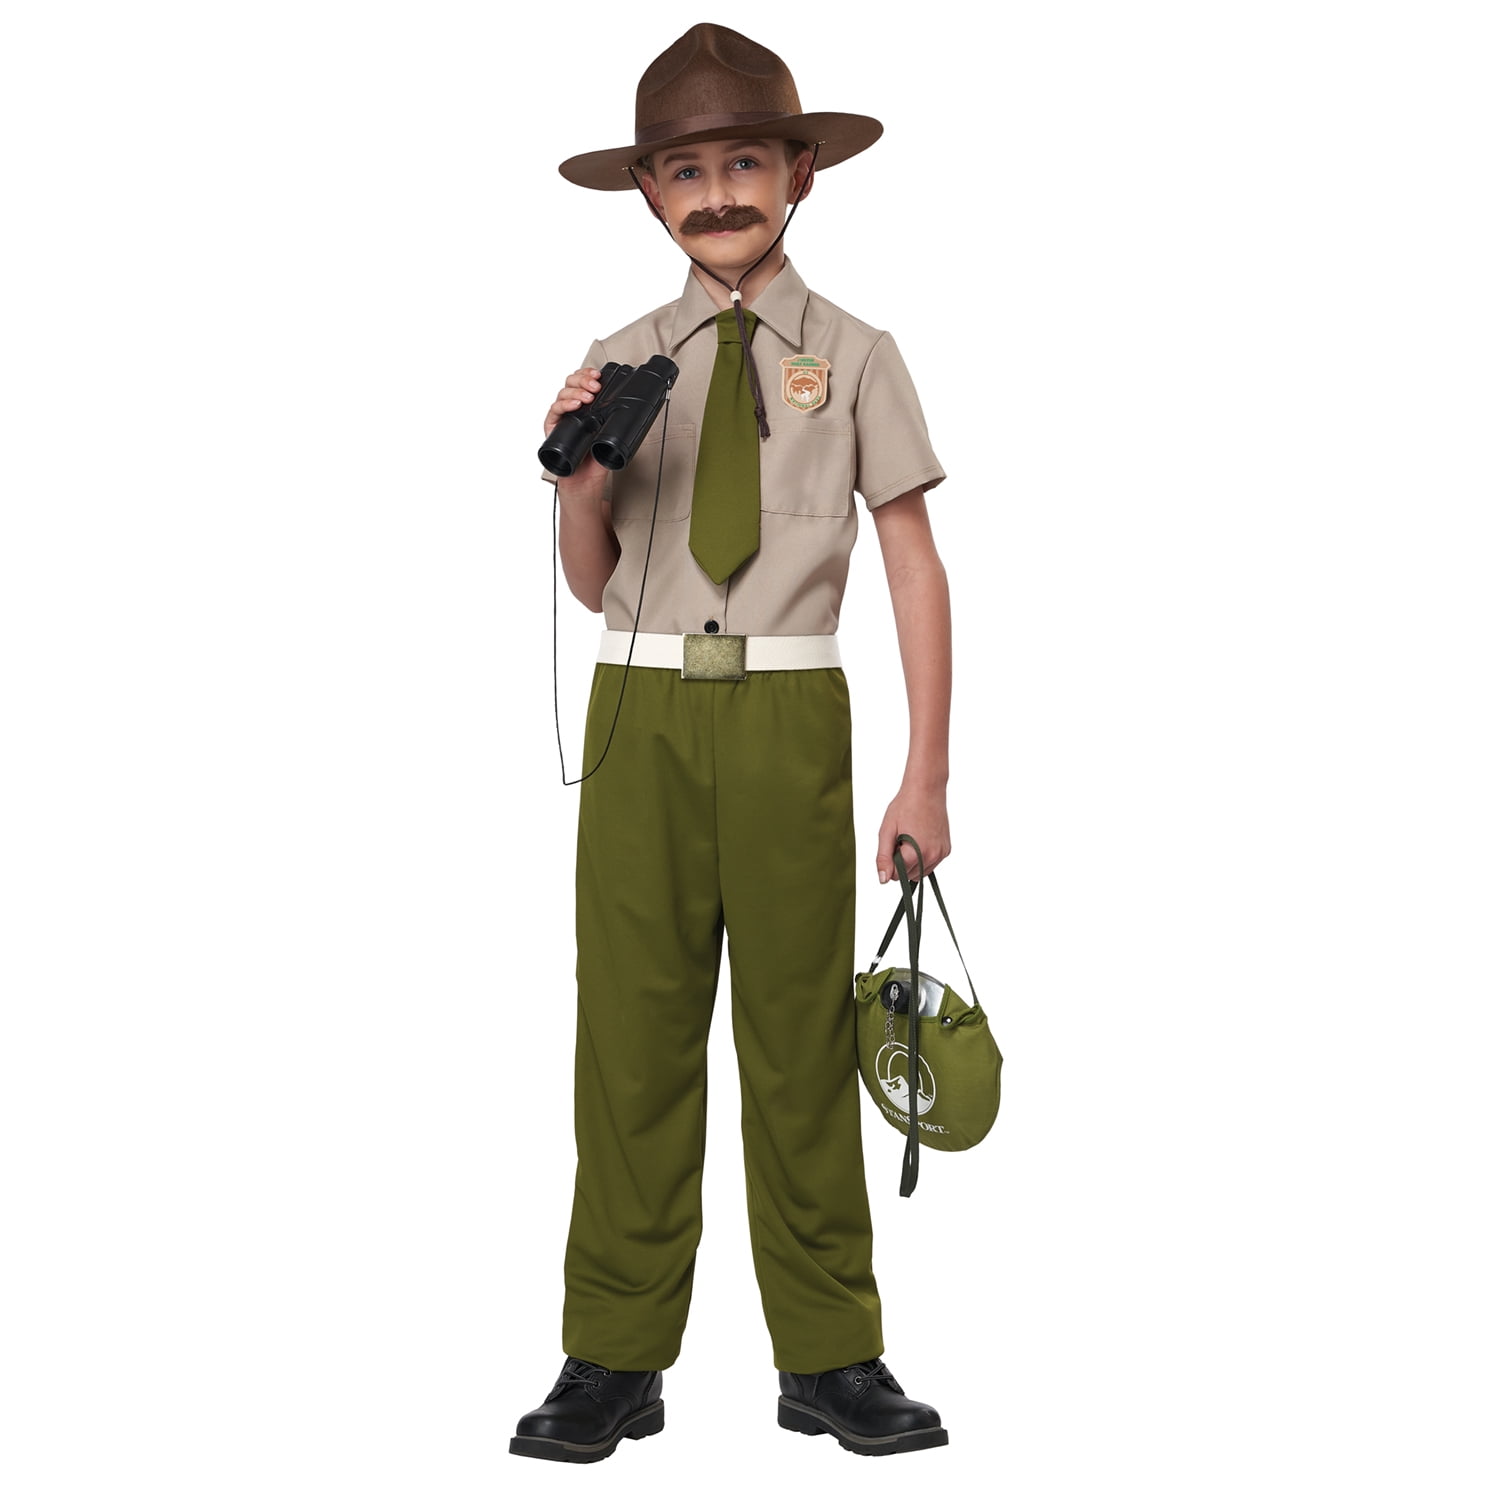 Park Ranger Child Costume - Walmart.com